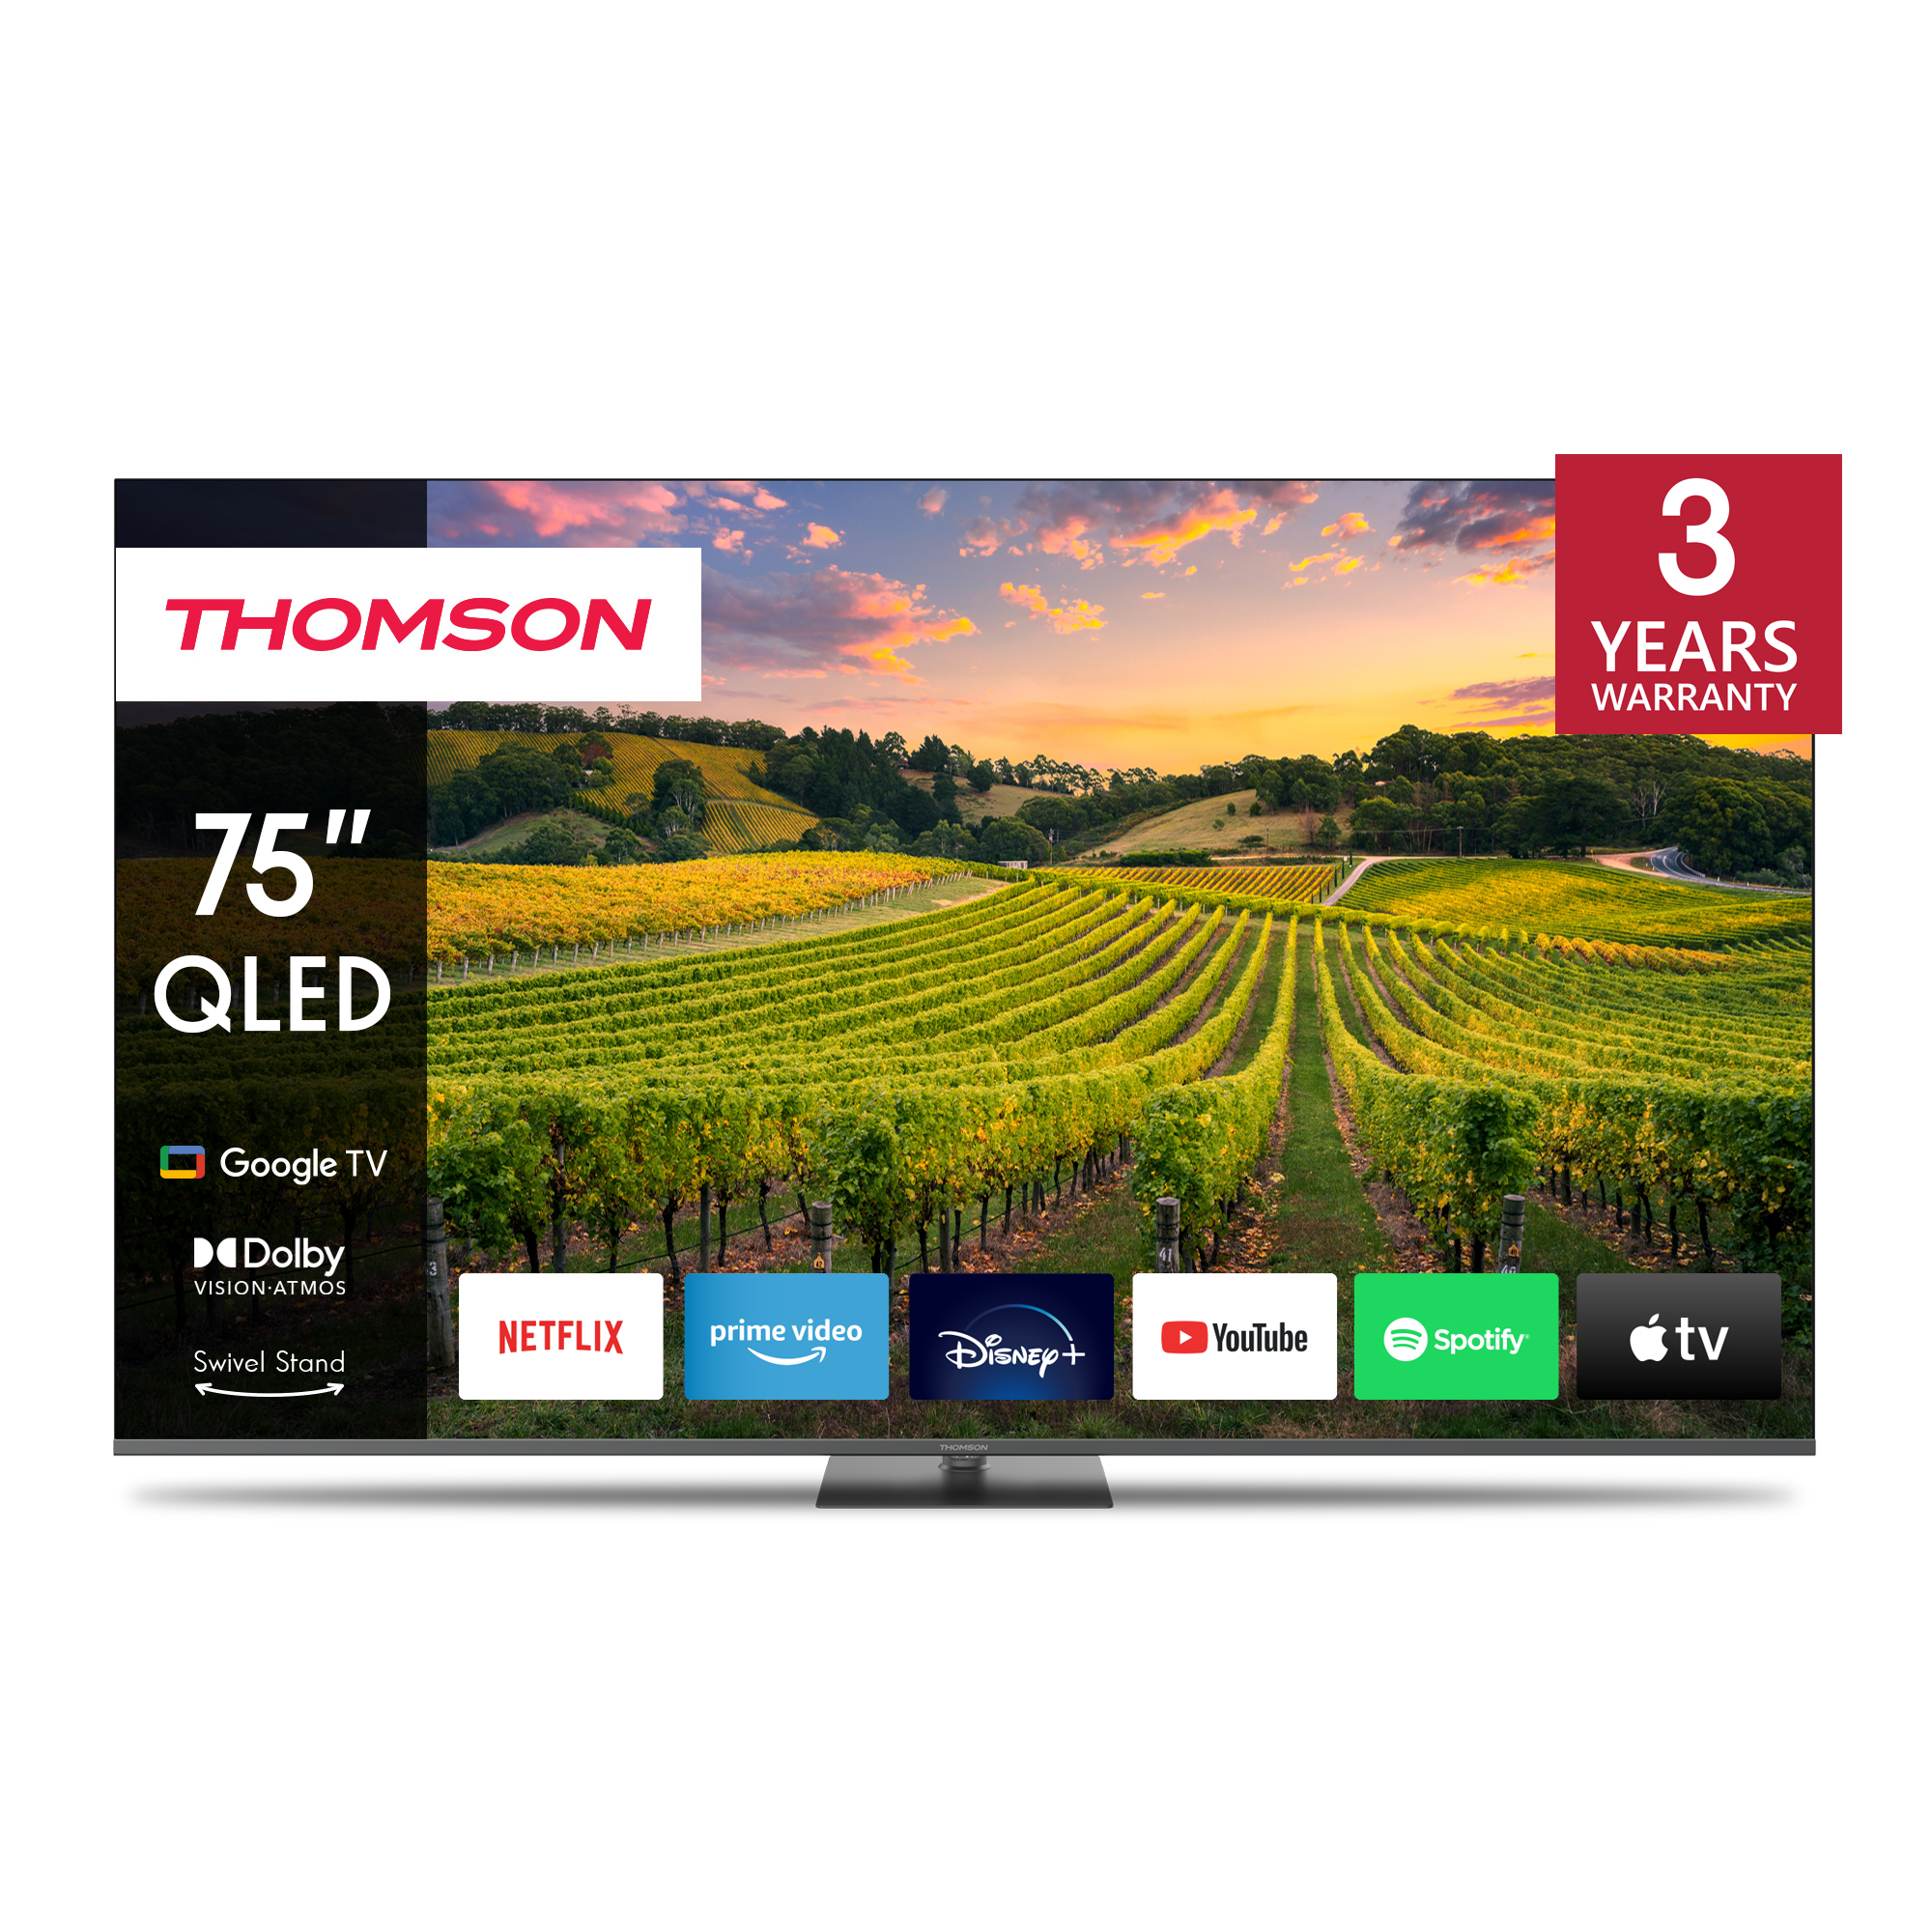 Thomson 75QG5C14 QLED Google TV